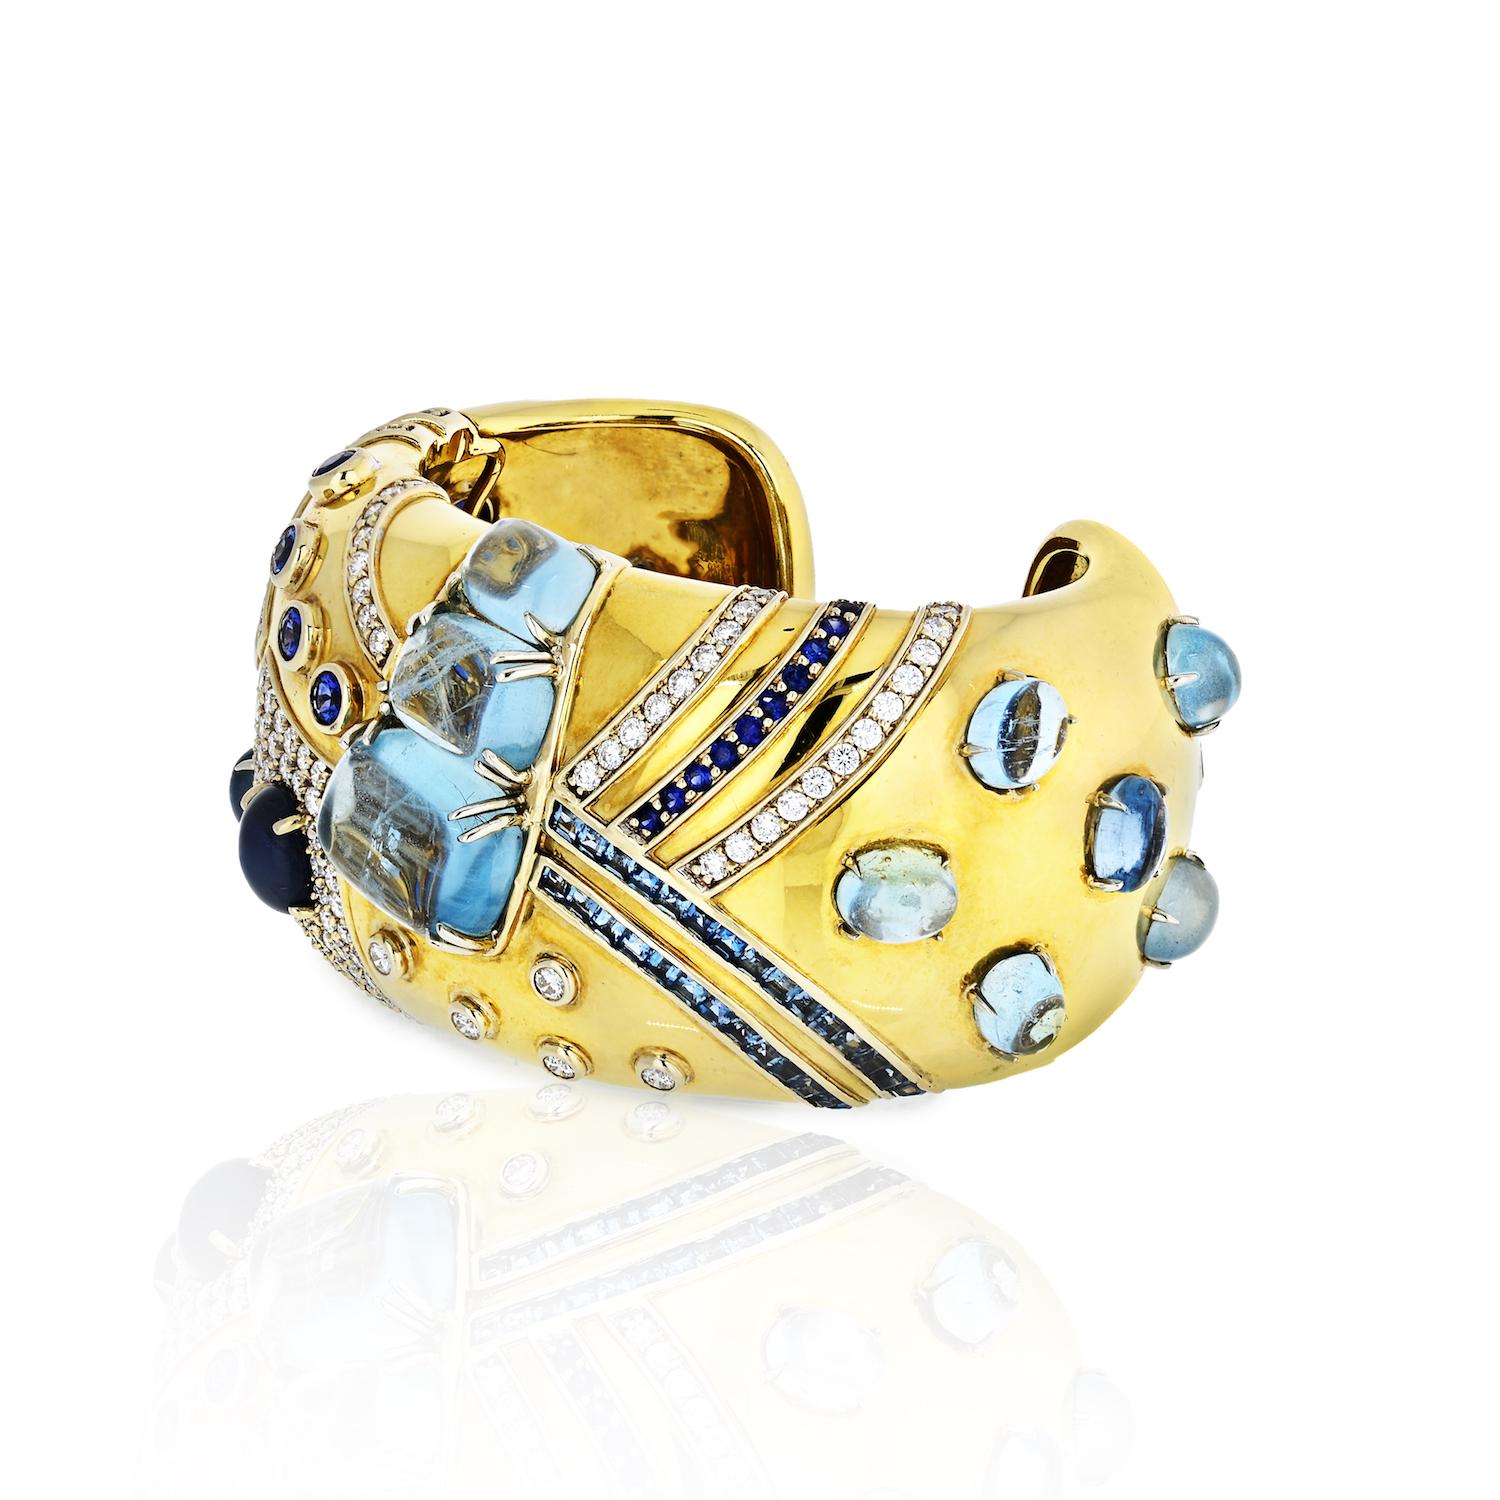 A Jazz Cuff in Aquamarine, Sapphire, and Diamond set in 18K Yellow Gold.  Signed Seaman Schepps.
